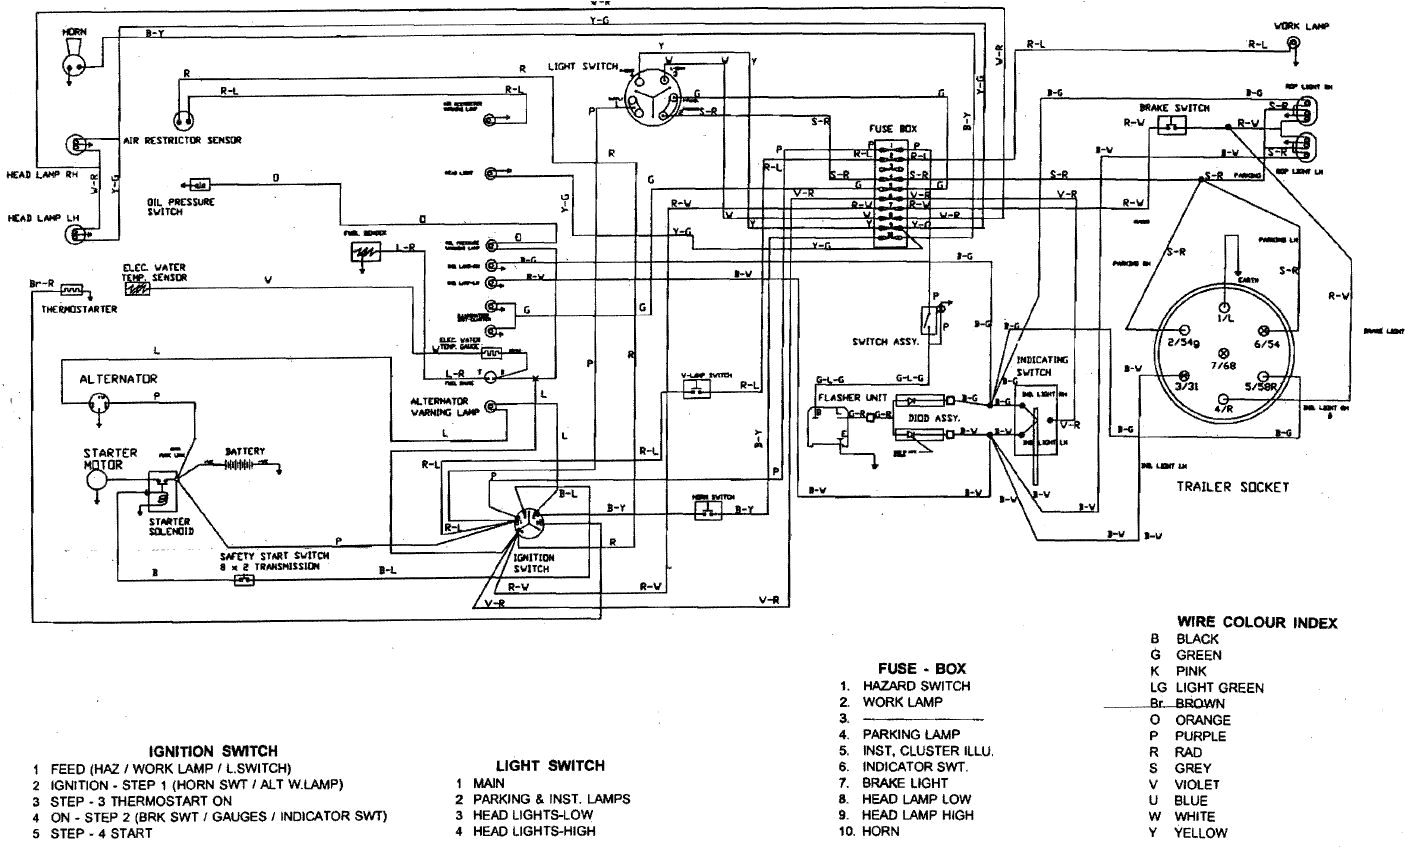 generator head wiring diagram wiring diagram megagenerator head wiring diagram 6